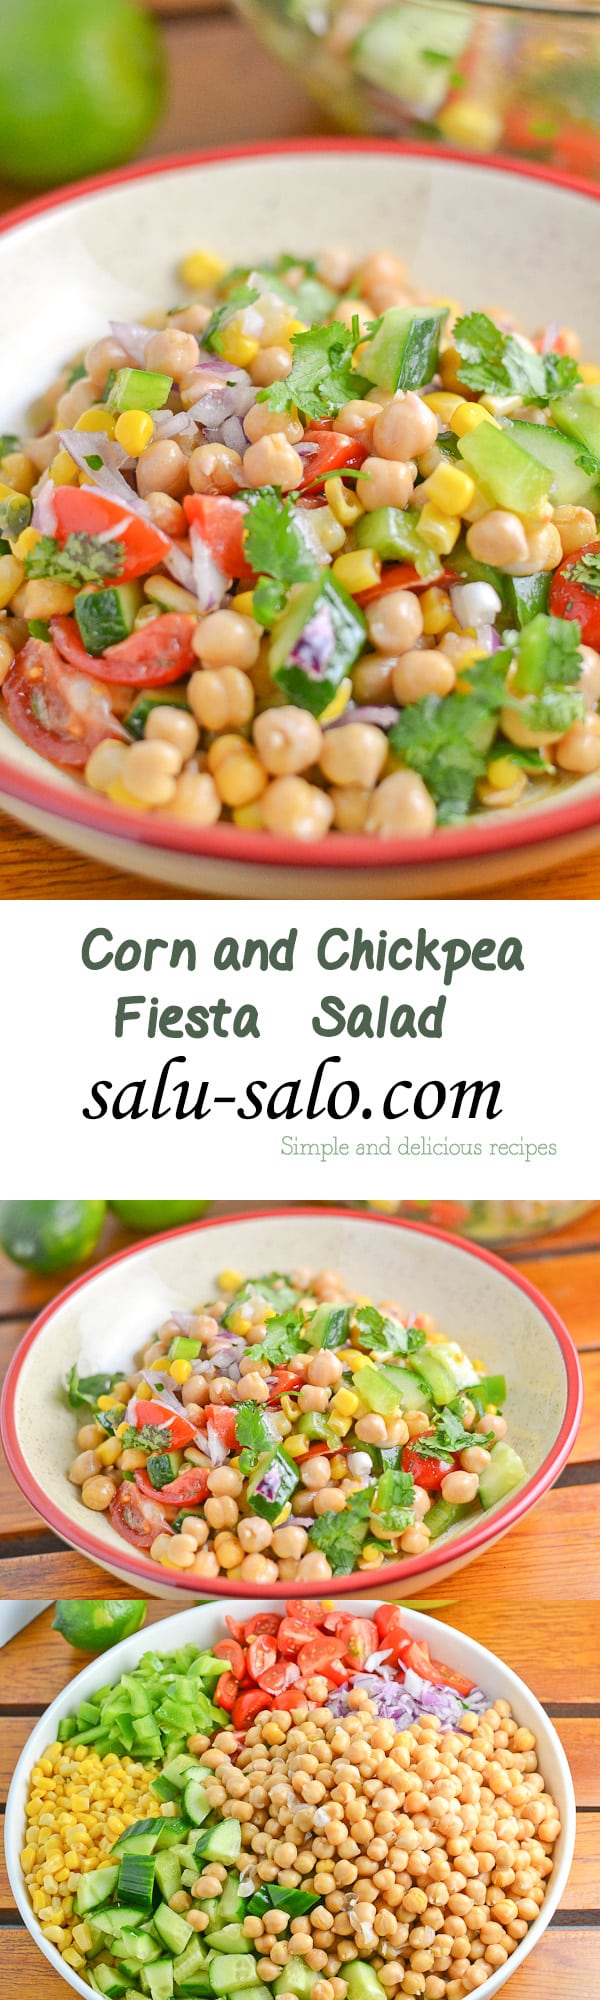 Corn and Chickpea Fiesta Salad